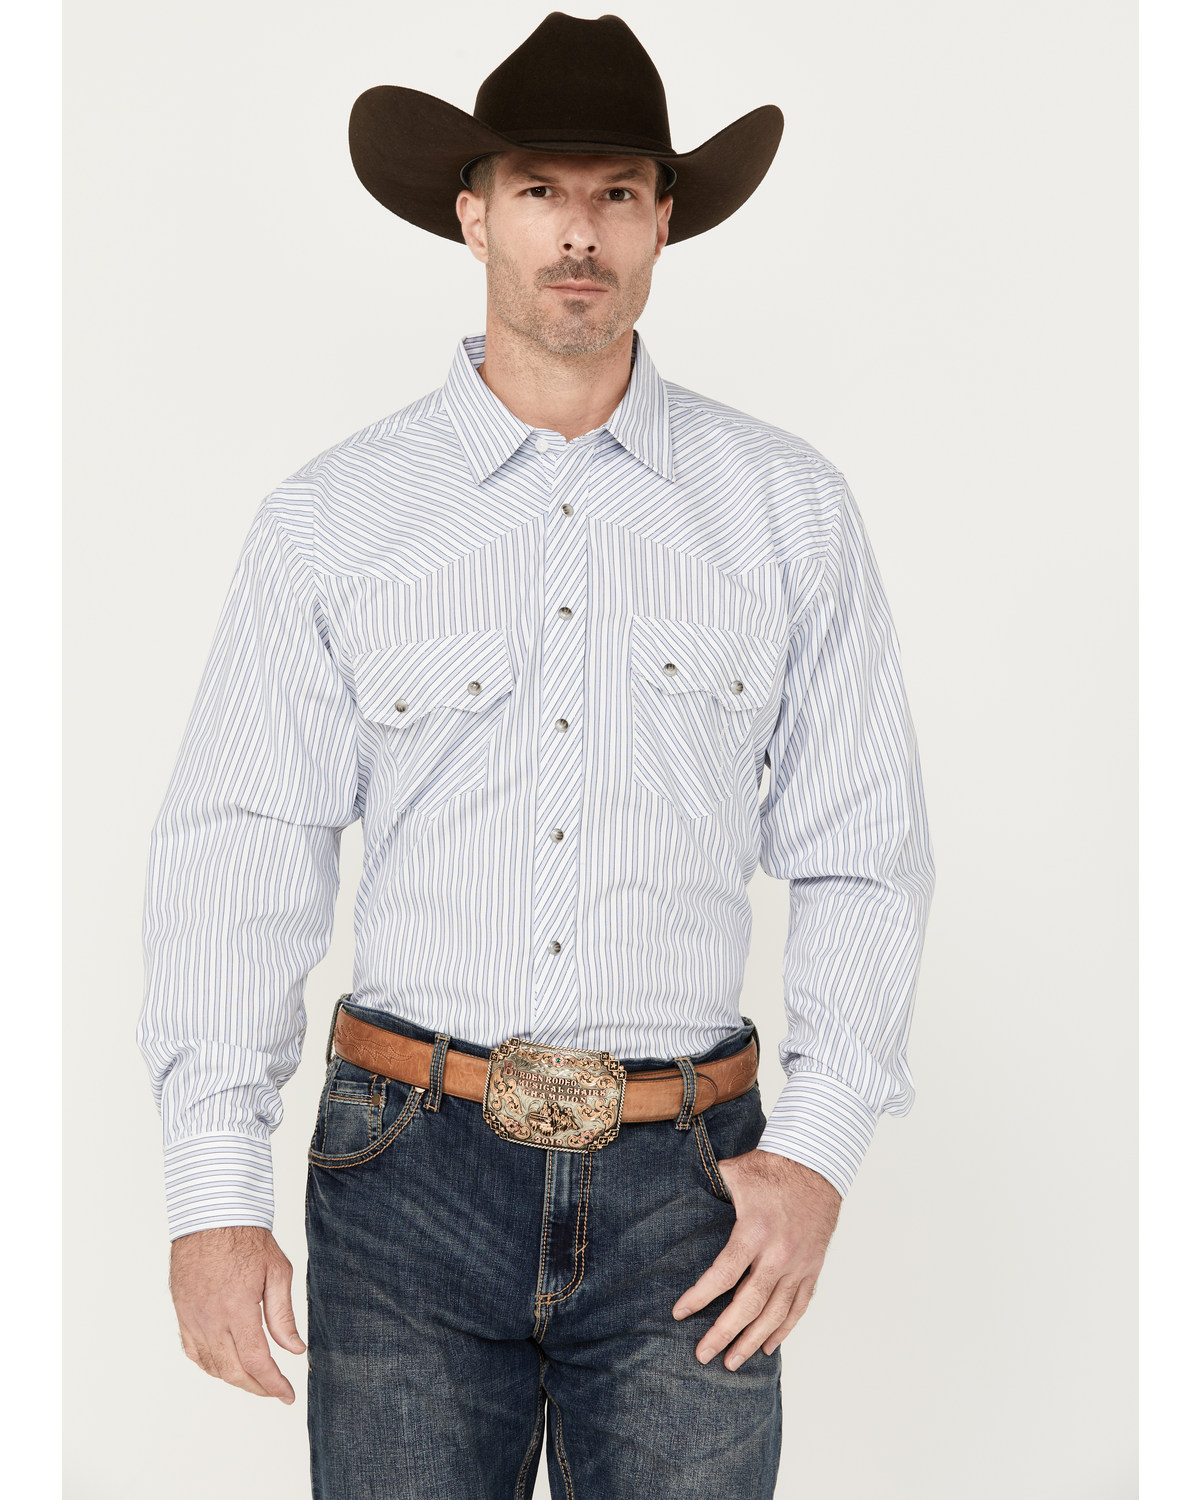 Resistol Men's Merritt Striped Print Long Sleeve Snap Western Shirt